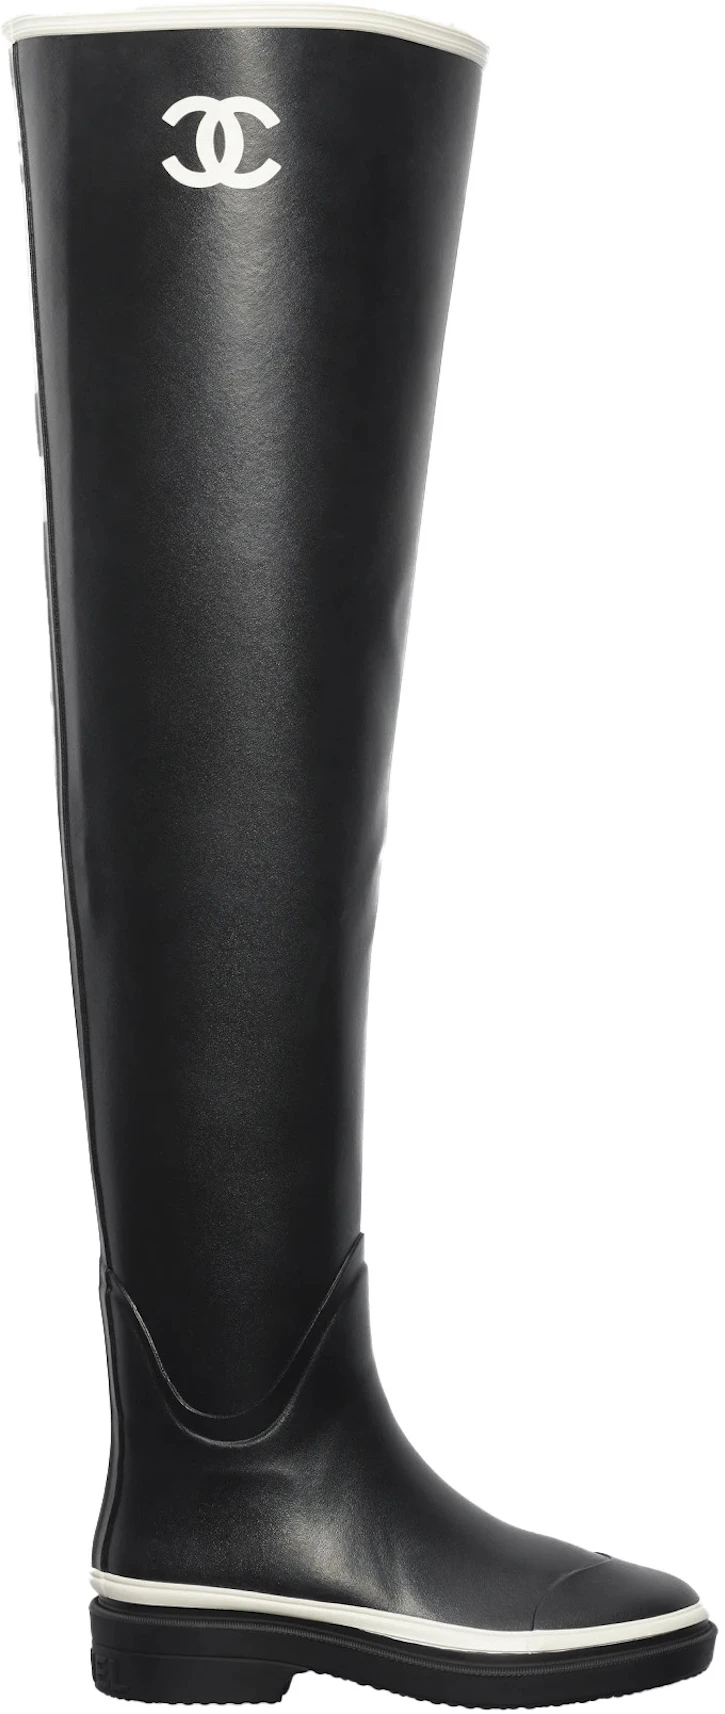 Chanel Thigh High Rubber Rain Boots Black - G39625 X56326 K5255 - IT